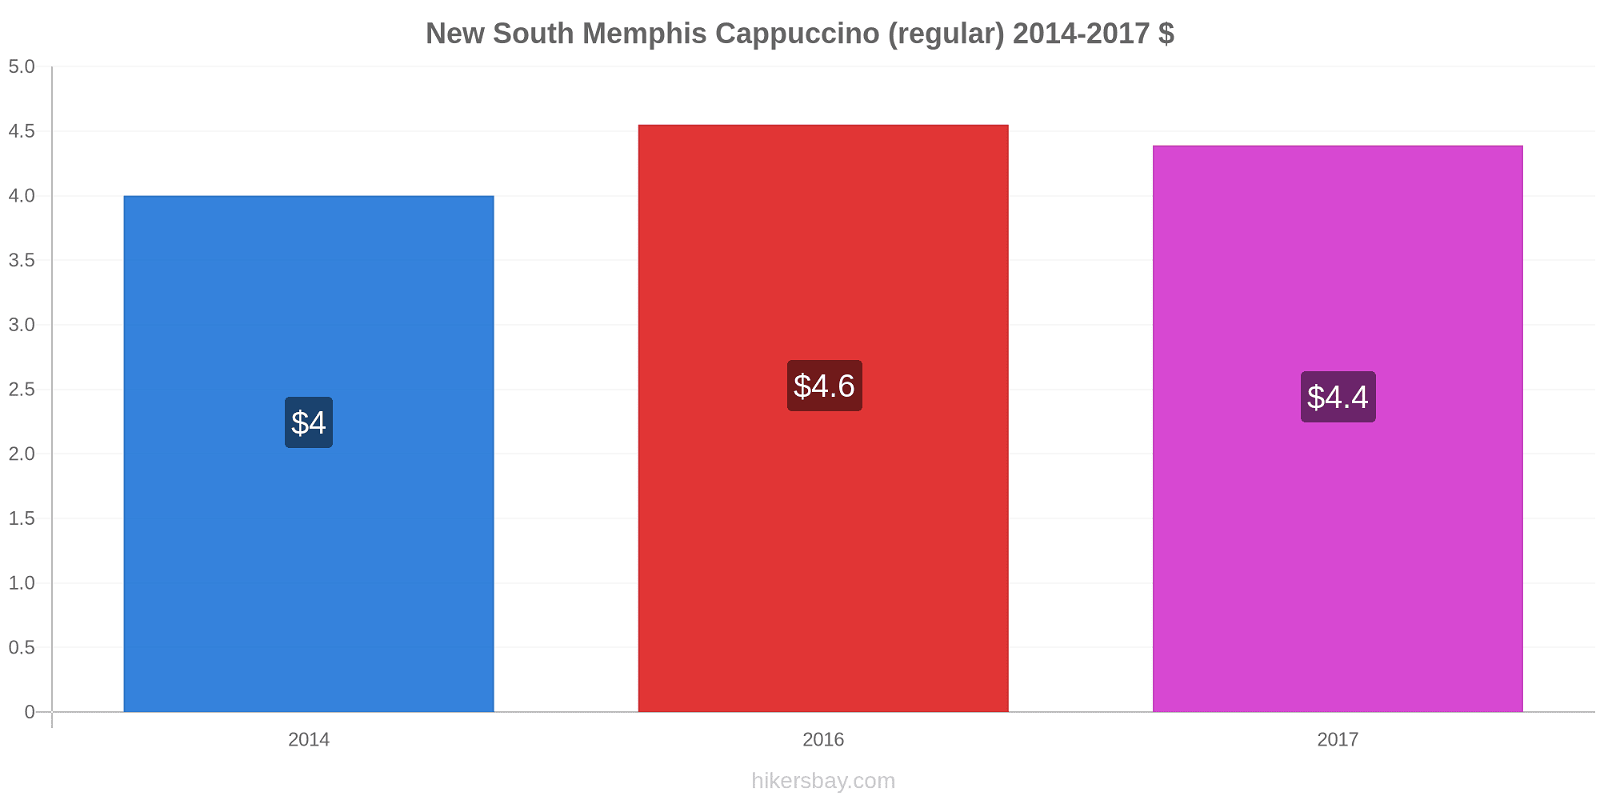 New South Memphis price changes Cappuccino (regular) hikersbay.com